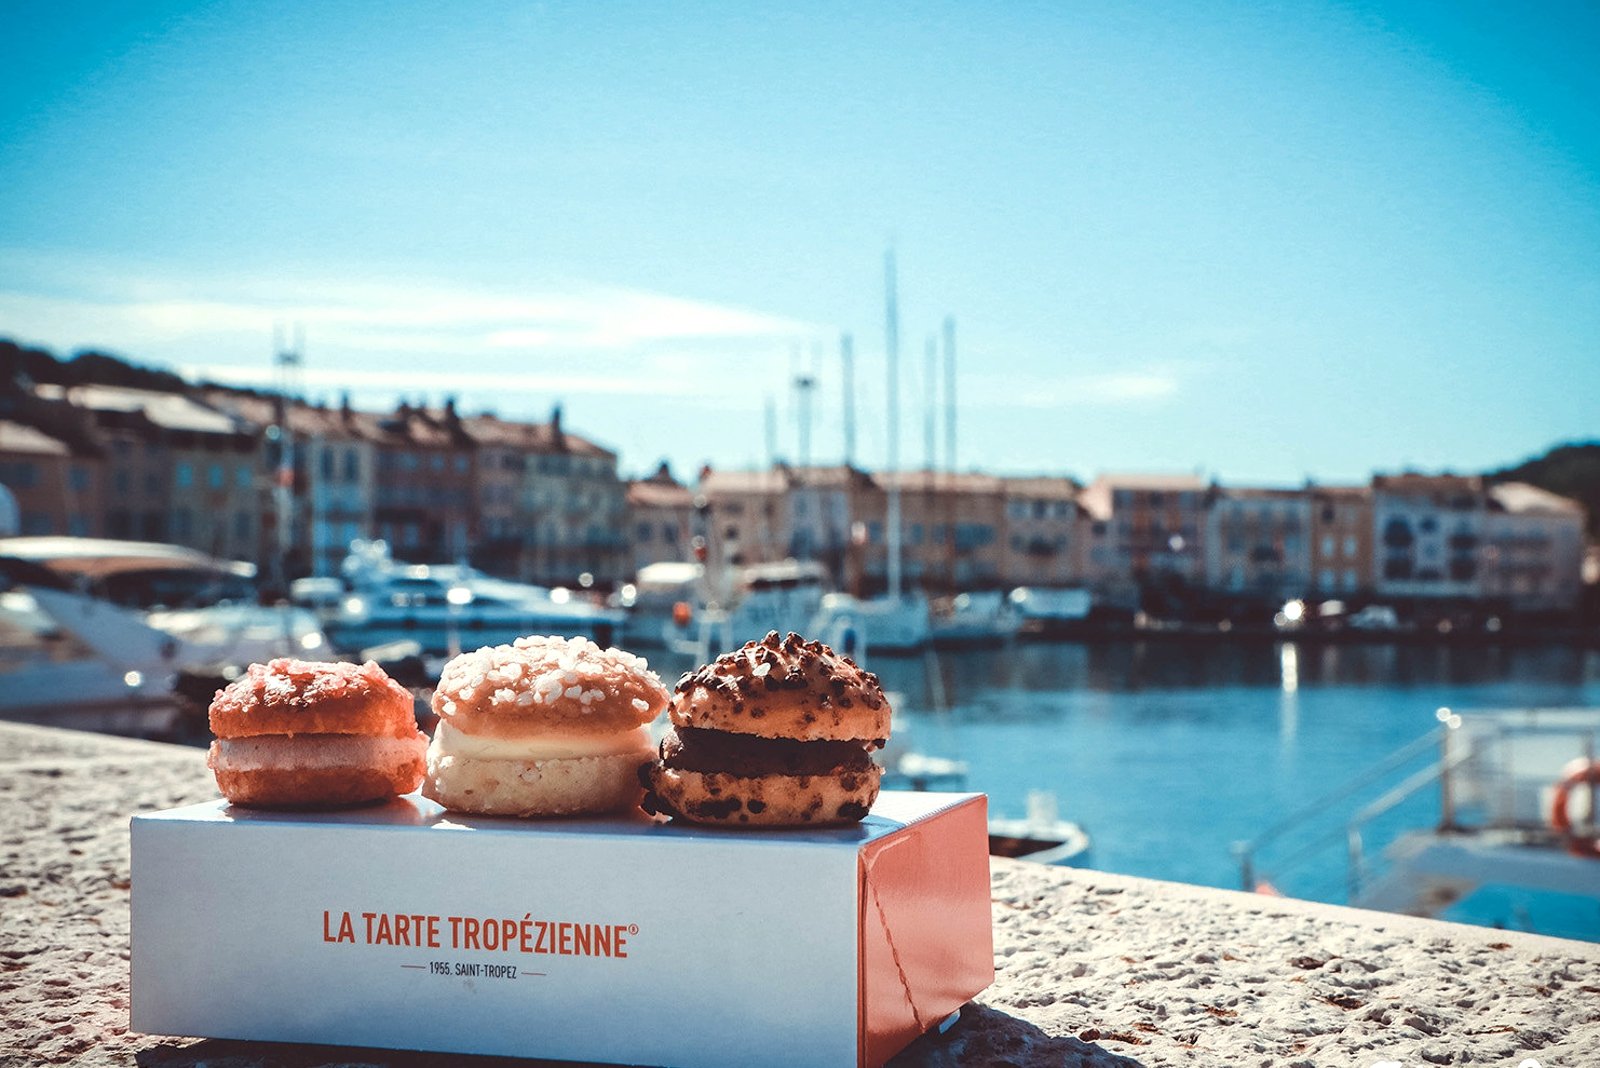 How to try tropezienne tart in Saint-Tropez